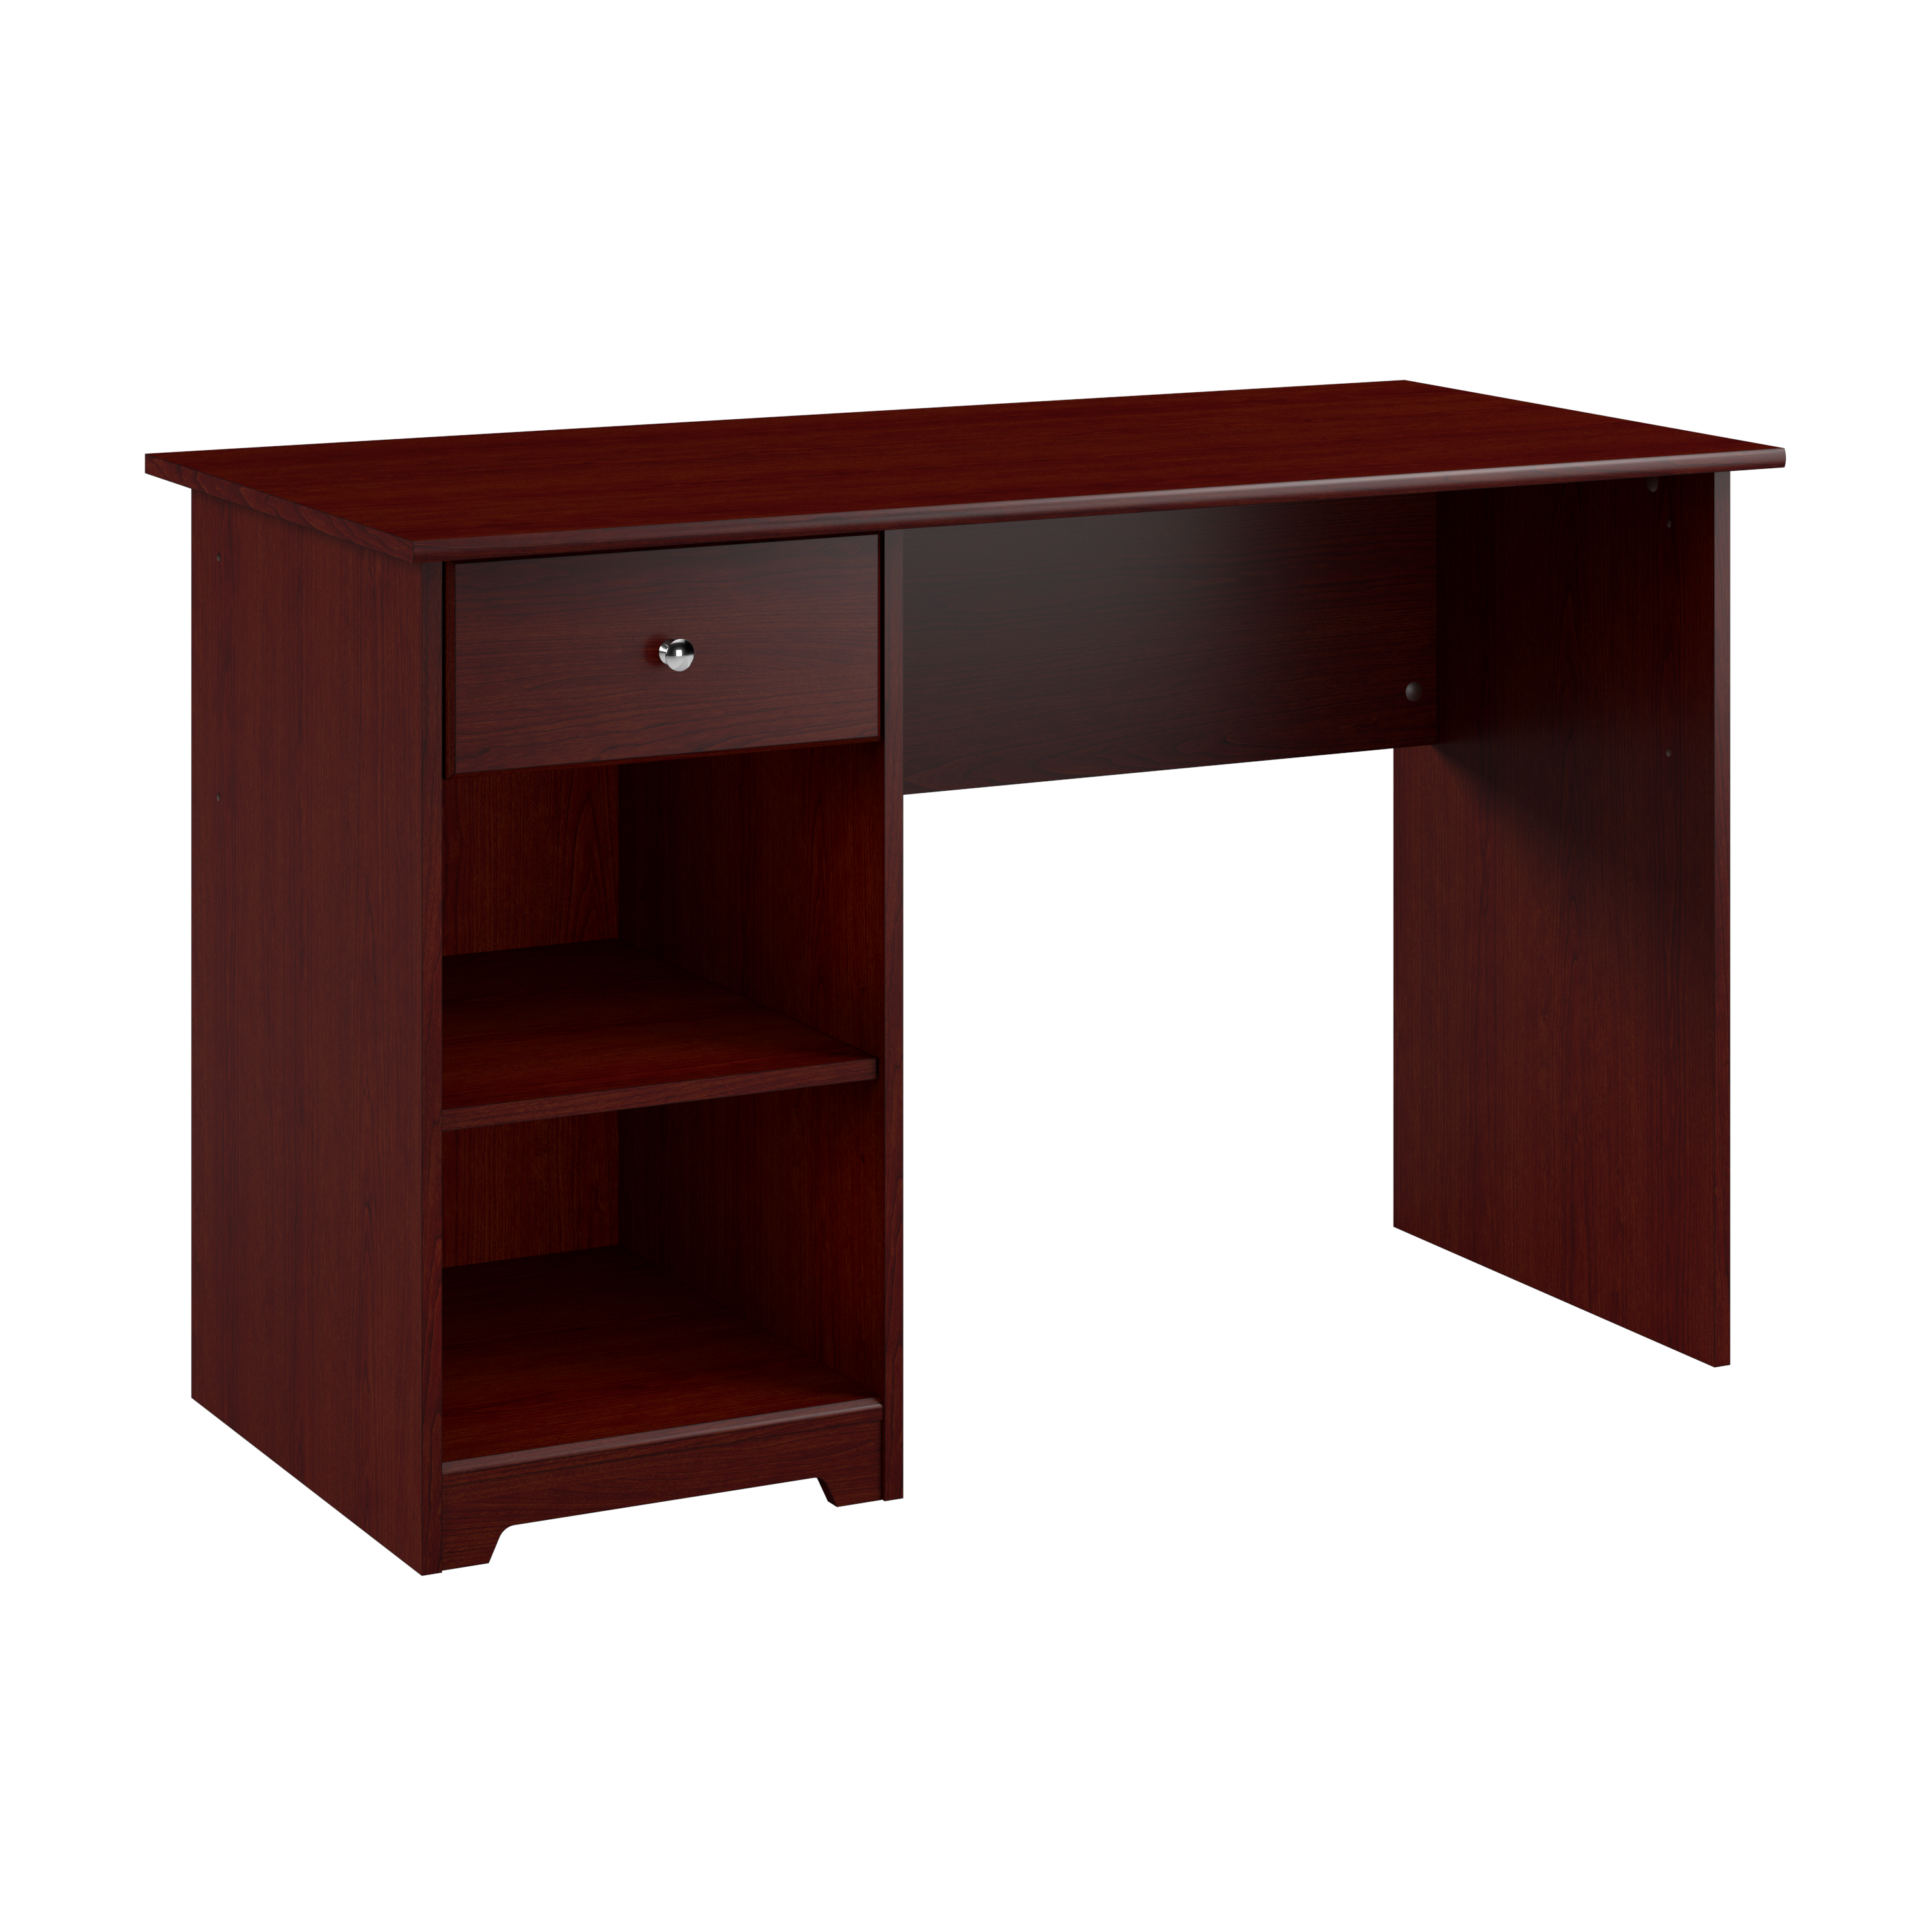 Shop Bush Furniture Cabot 48W Computer Desk with Storage 02 WC31447 #color_harvest cherry